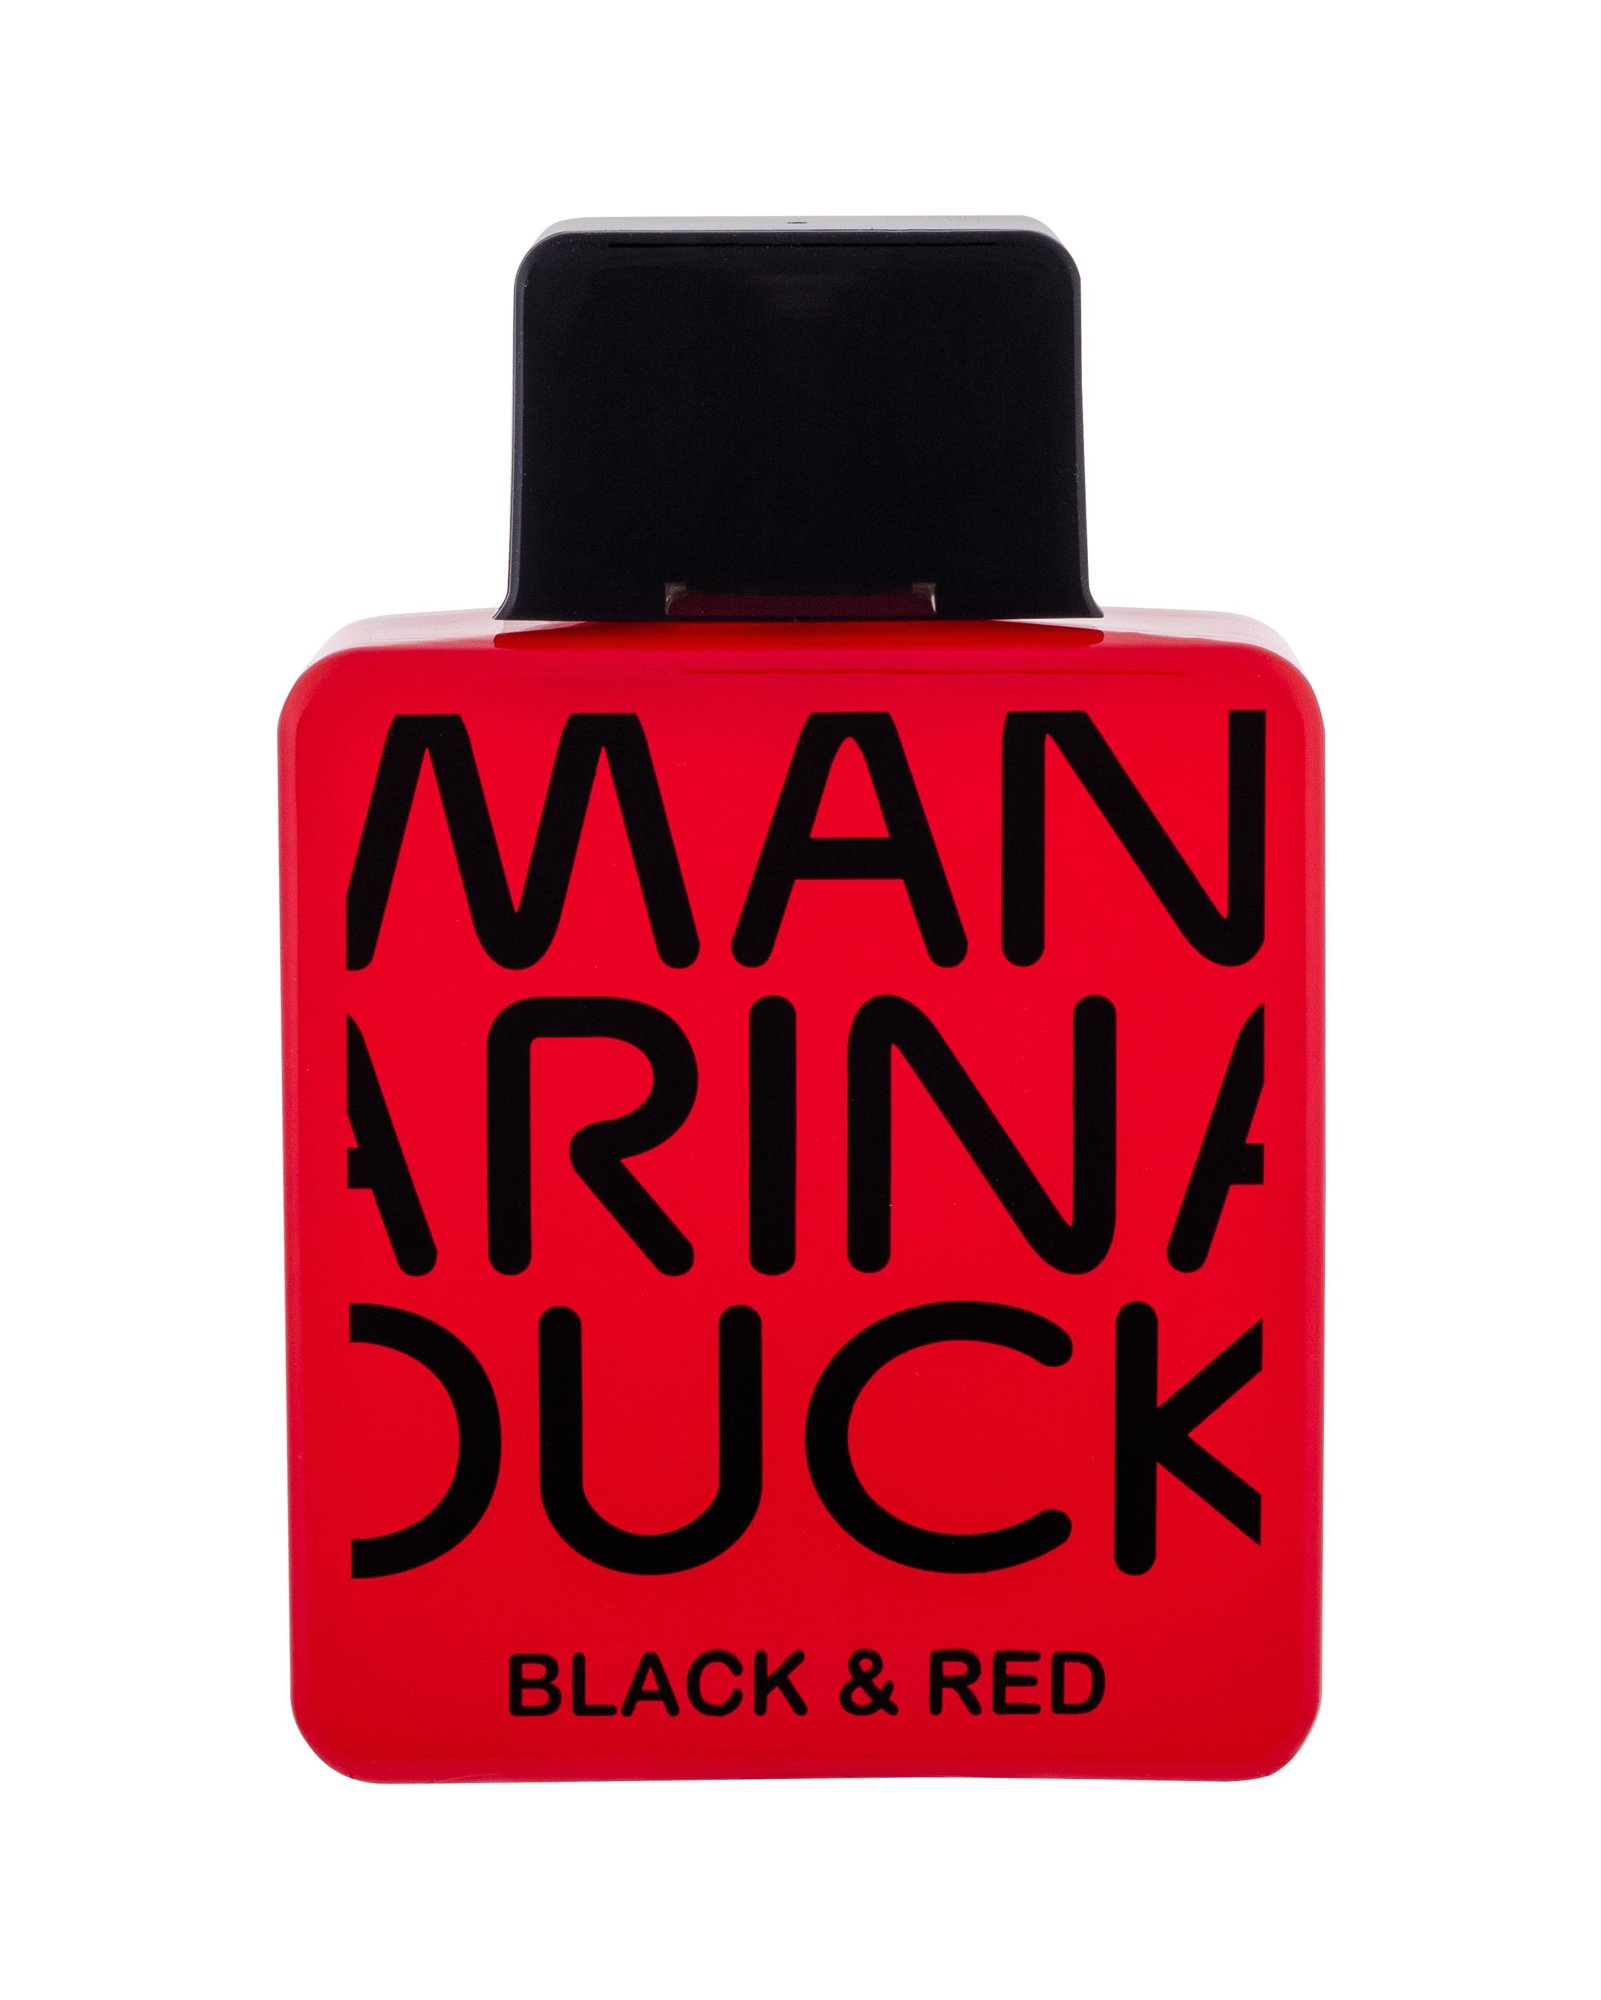 Mandarina Duck Black & Red